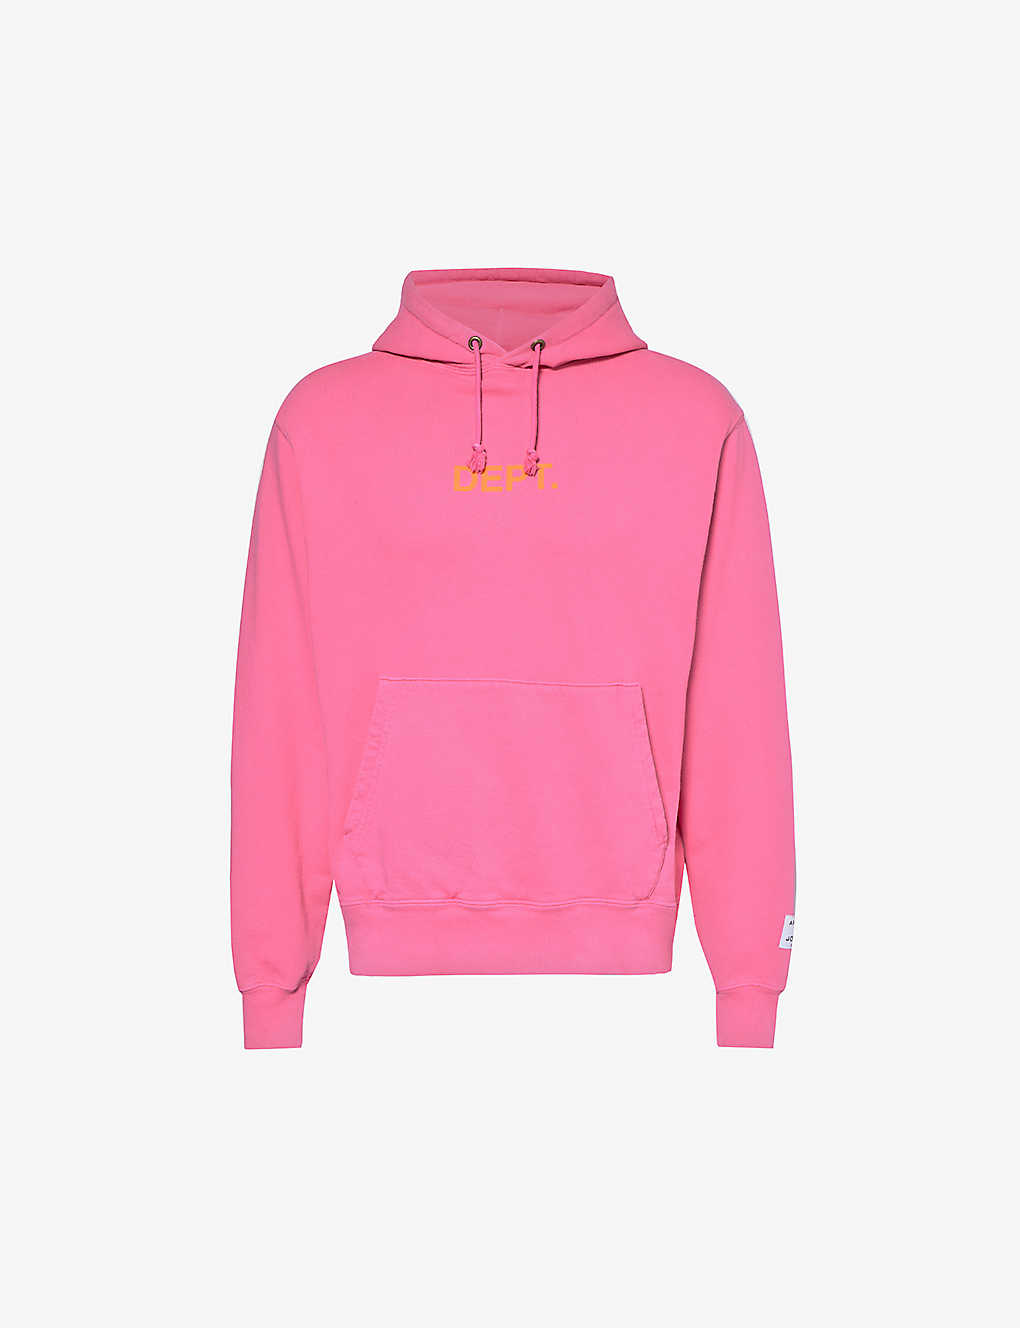 Shop Gallery Dept. Gallery Dept Men's Flo Pink Brand-print Brand-patch Cotton-jersey Hoody